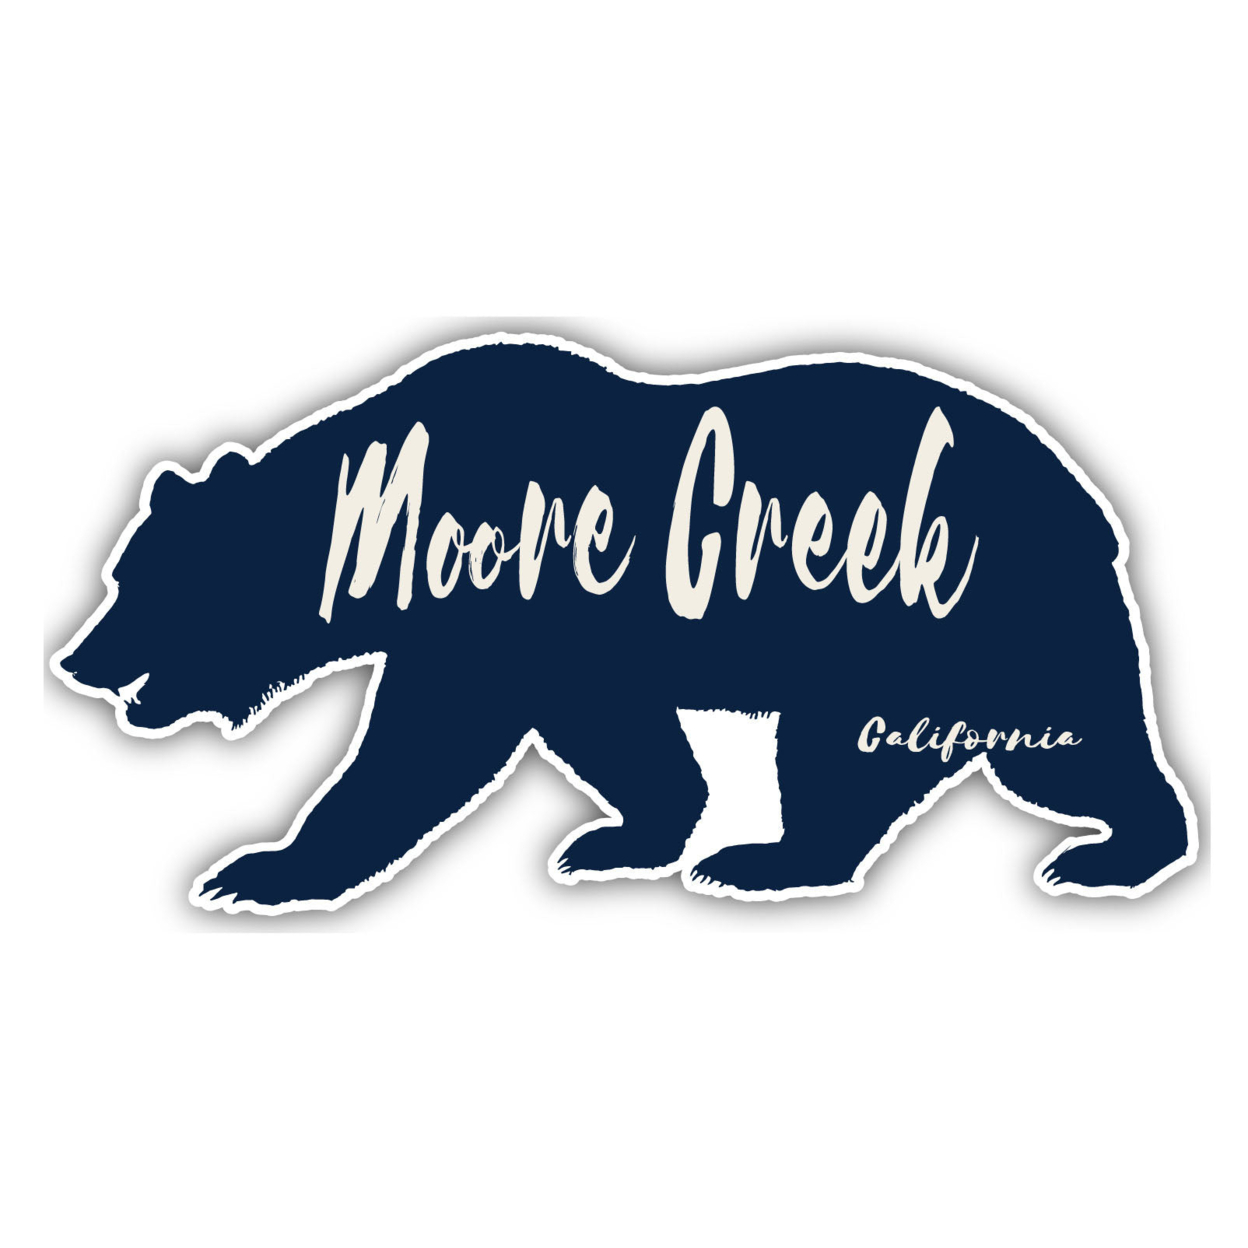 Moore Creek California Souvenir Decorative Stickers (Choose Theme And Size) - Single Unit, 2-Inch, Bear